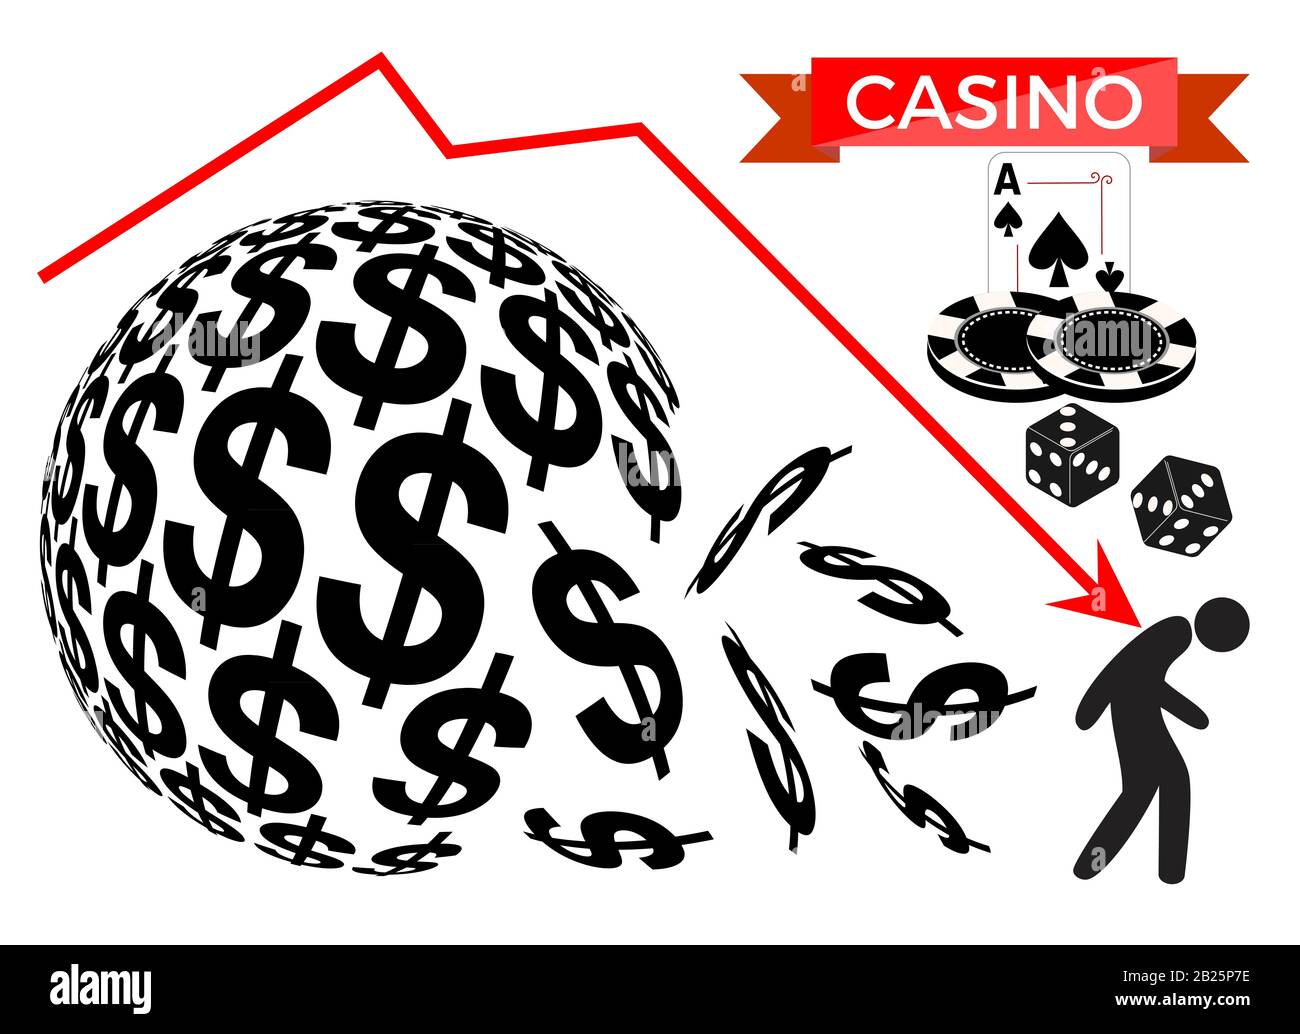 Distressed gambler getting broke with casino games. Stock Photo